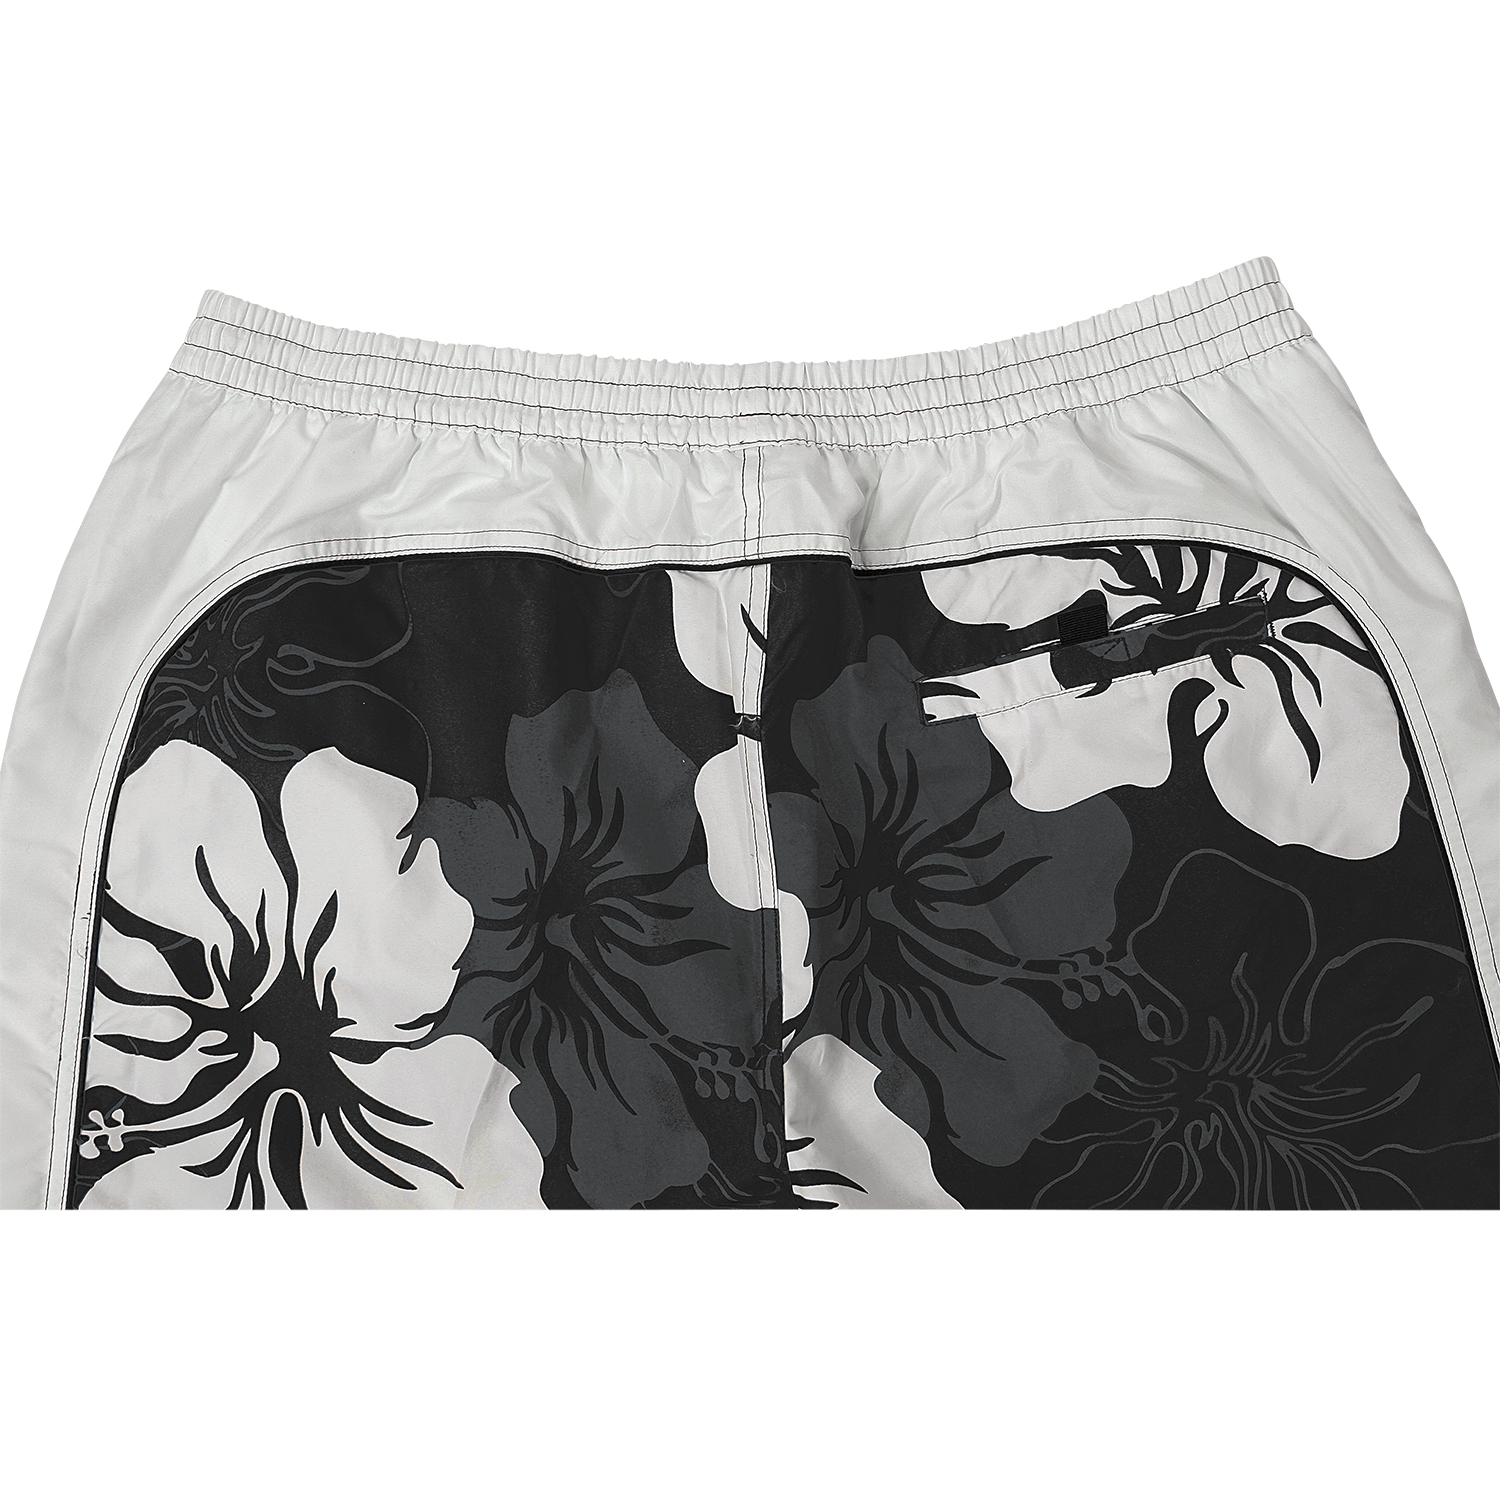 Swim bermudas in black-white with flower print by eleMar up to oversize 10XL